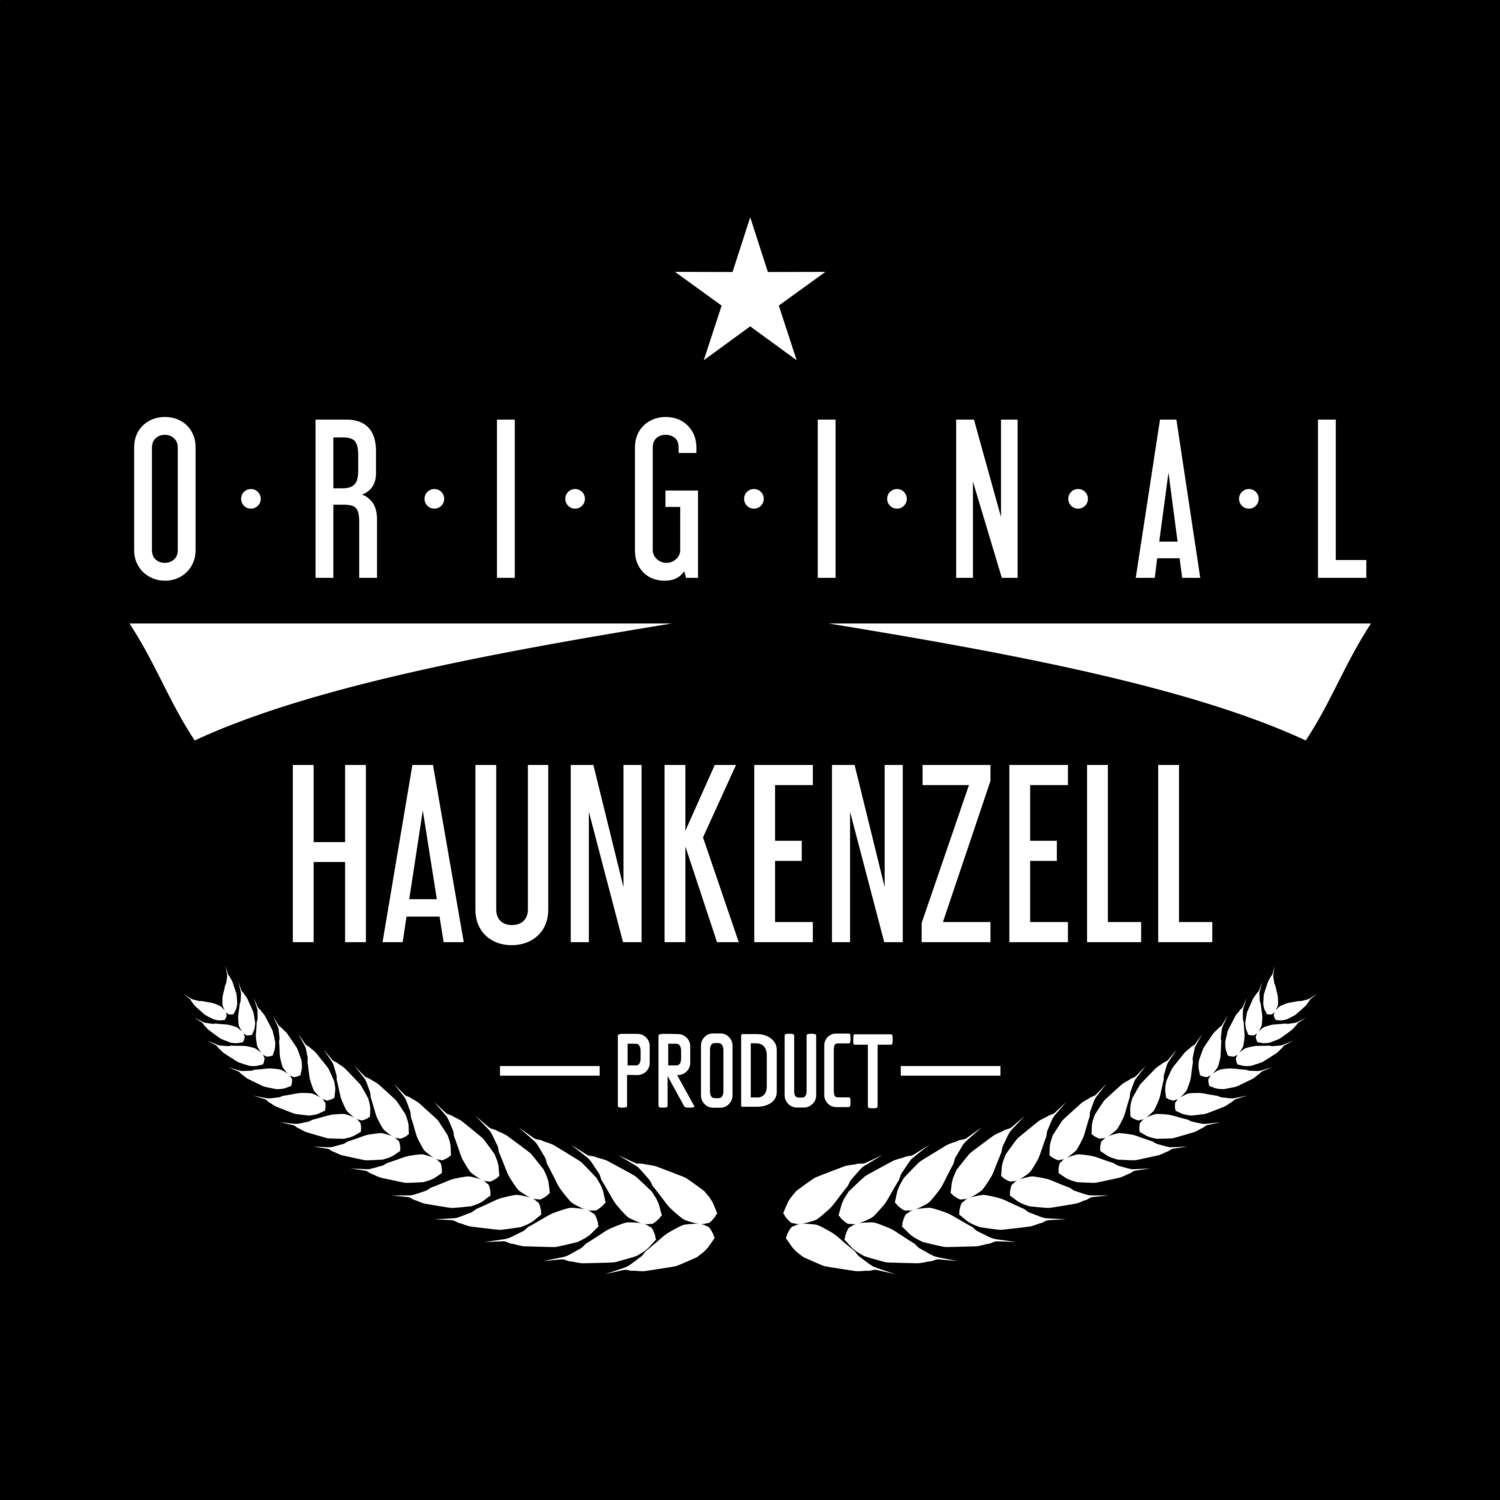 Haunkenzell T-Shirt »Original Product«